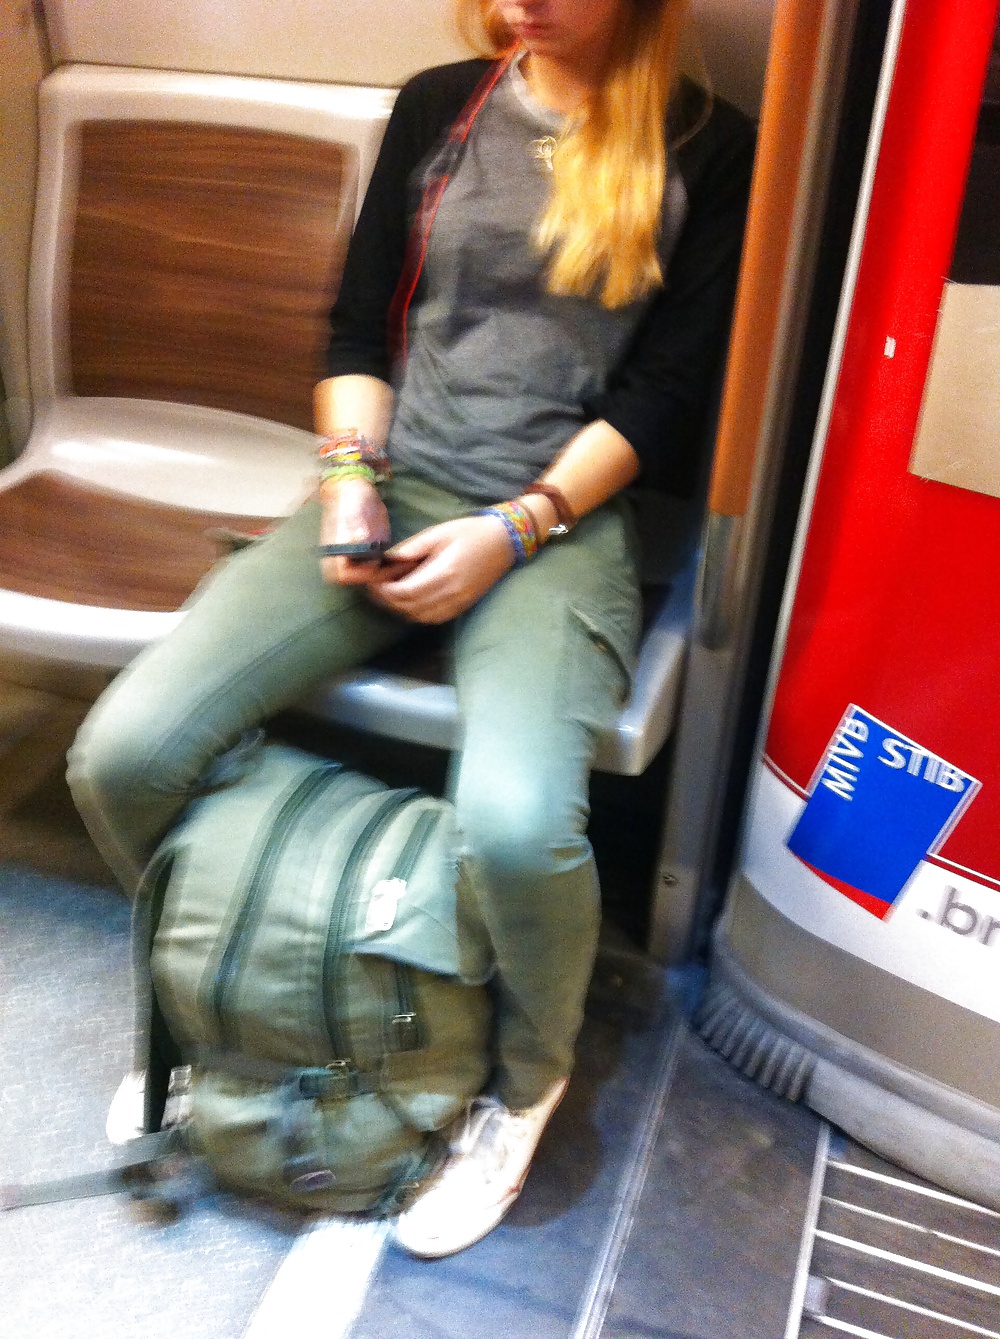 Hot blonde girl in the metro